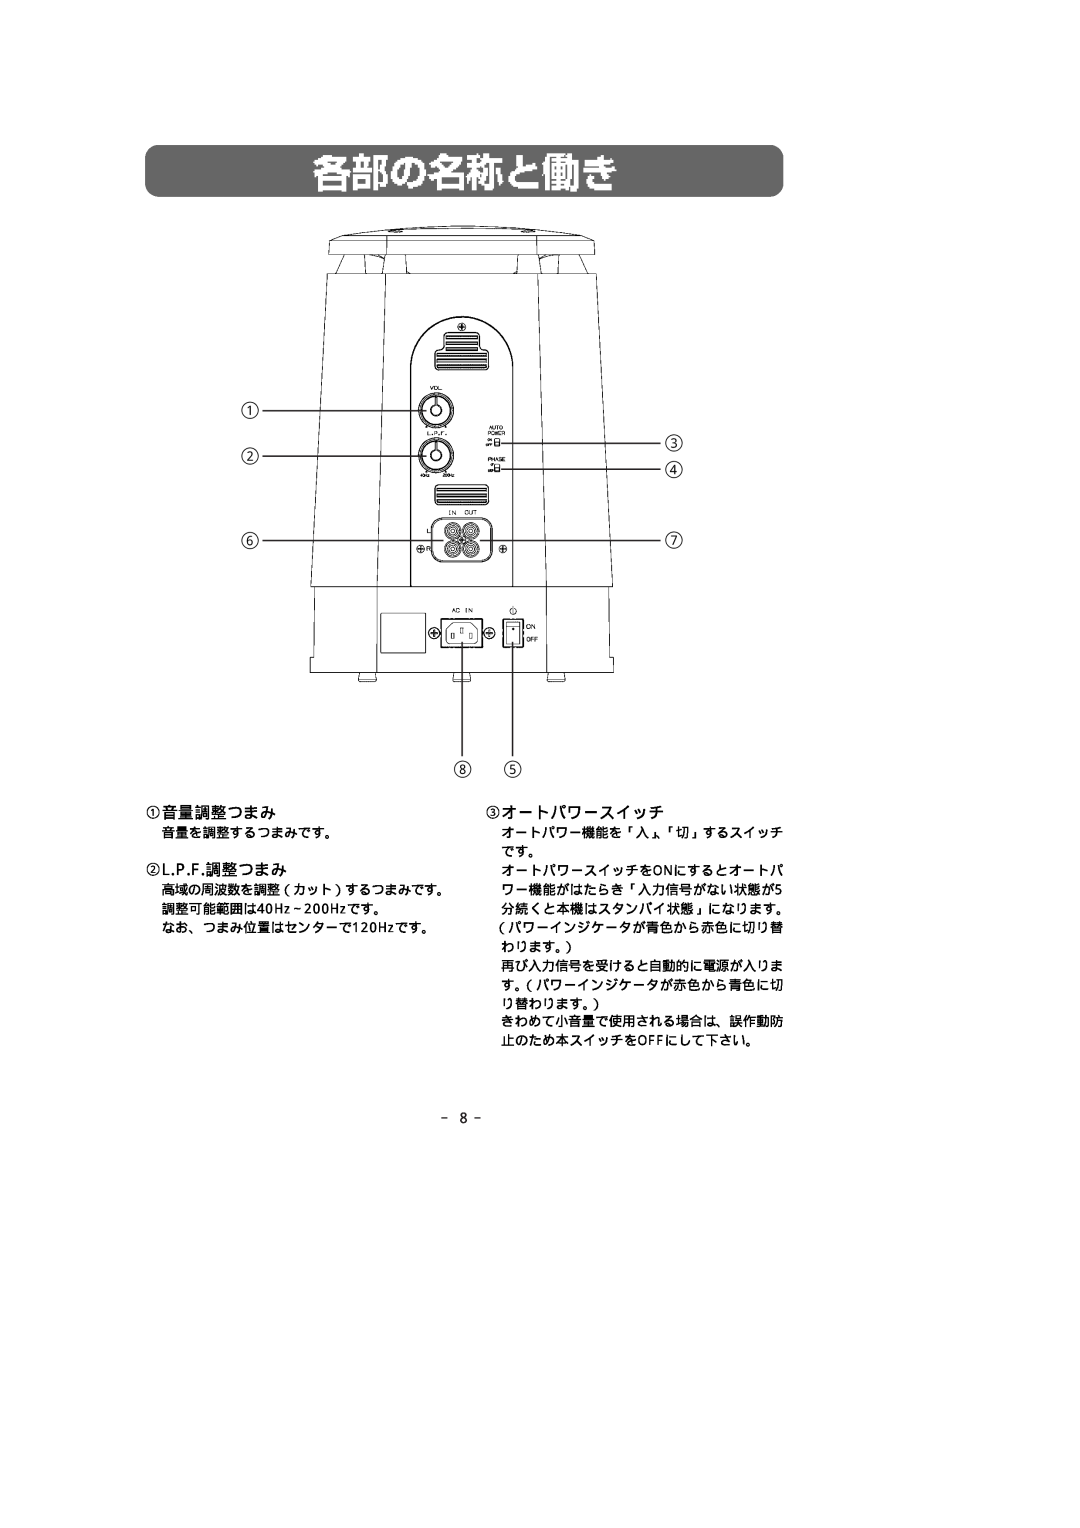 Fujitsu 316SW manual ①音量調整つまみ, ③オートパワースイッチ, ②L.P.F.調整つまみ, － 8 － 